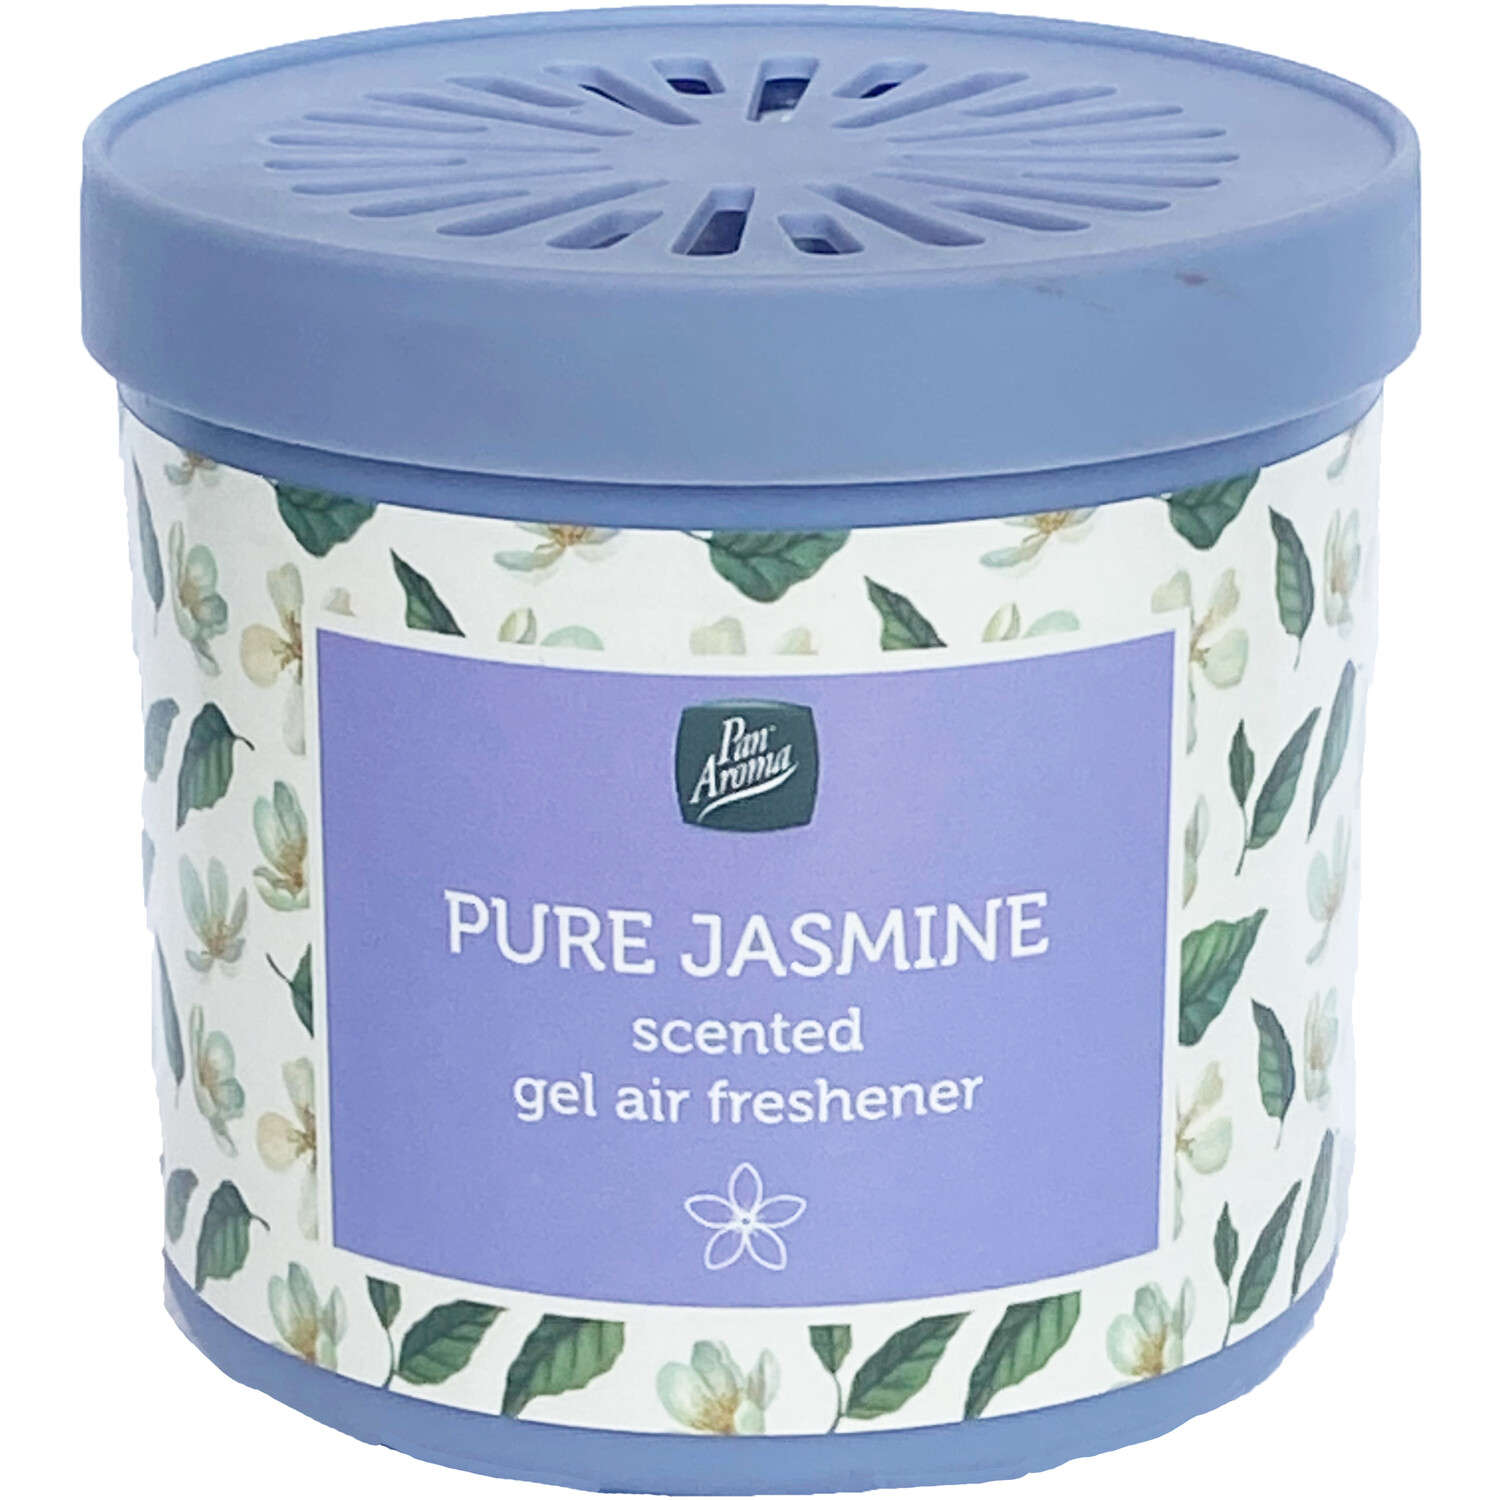 Pan Aroma Gel Air Freshener - Pure Jasmine Image